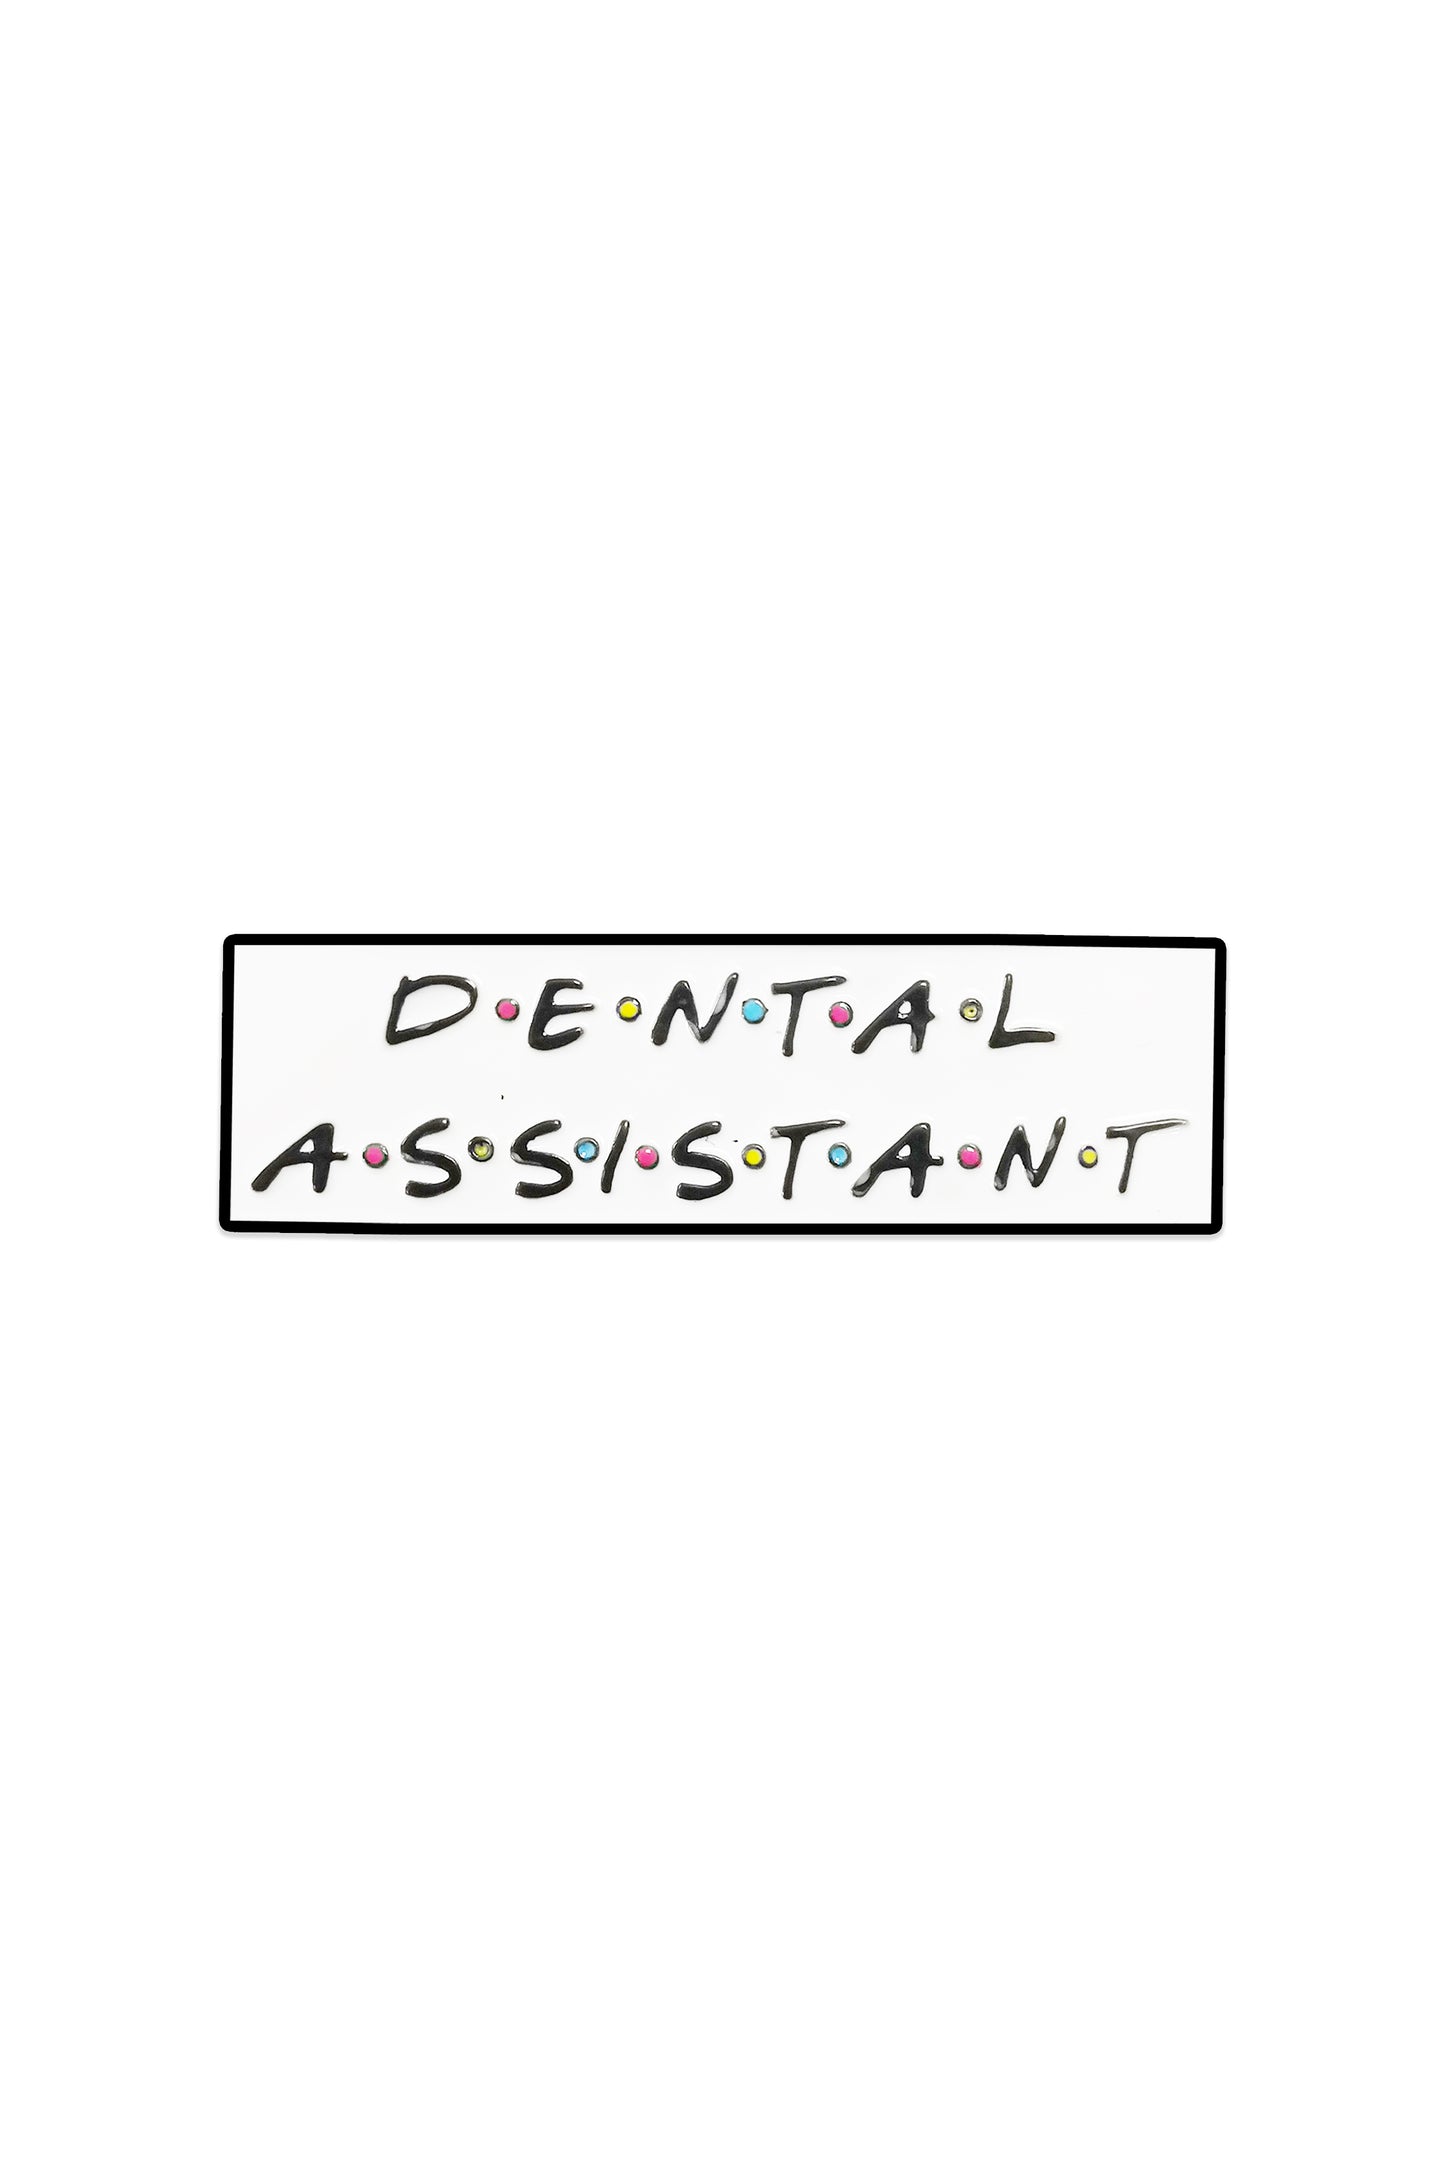 Friends Dental Assistant Pin